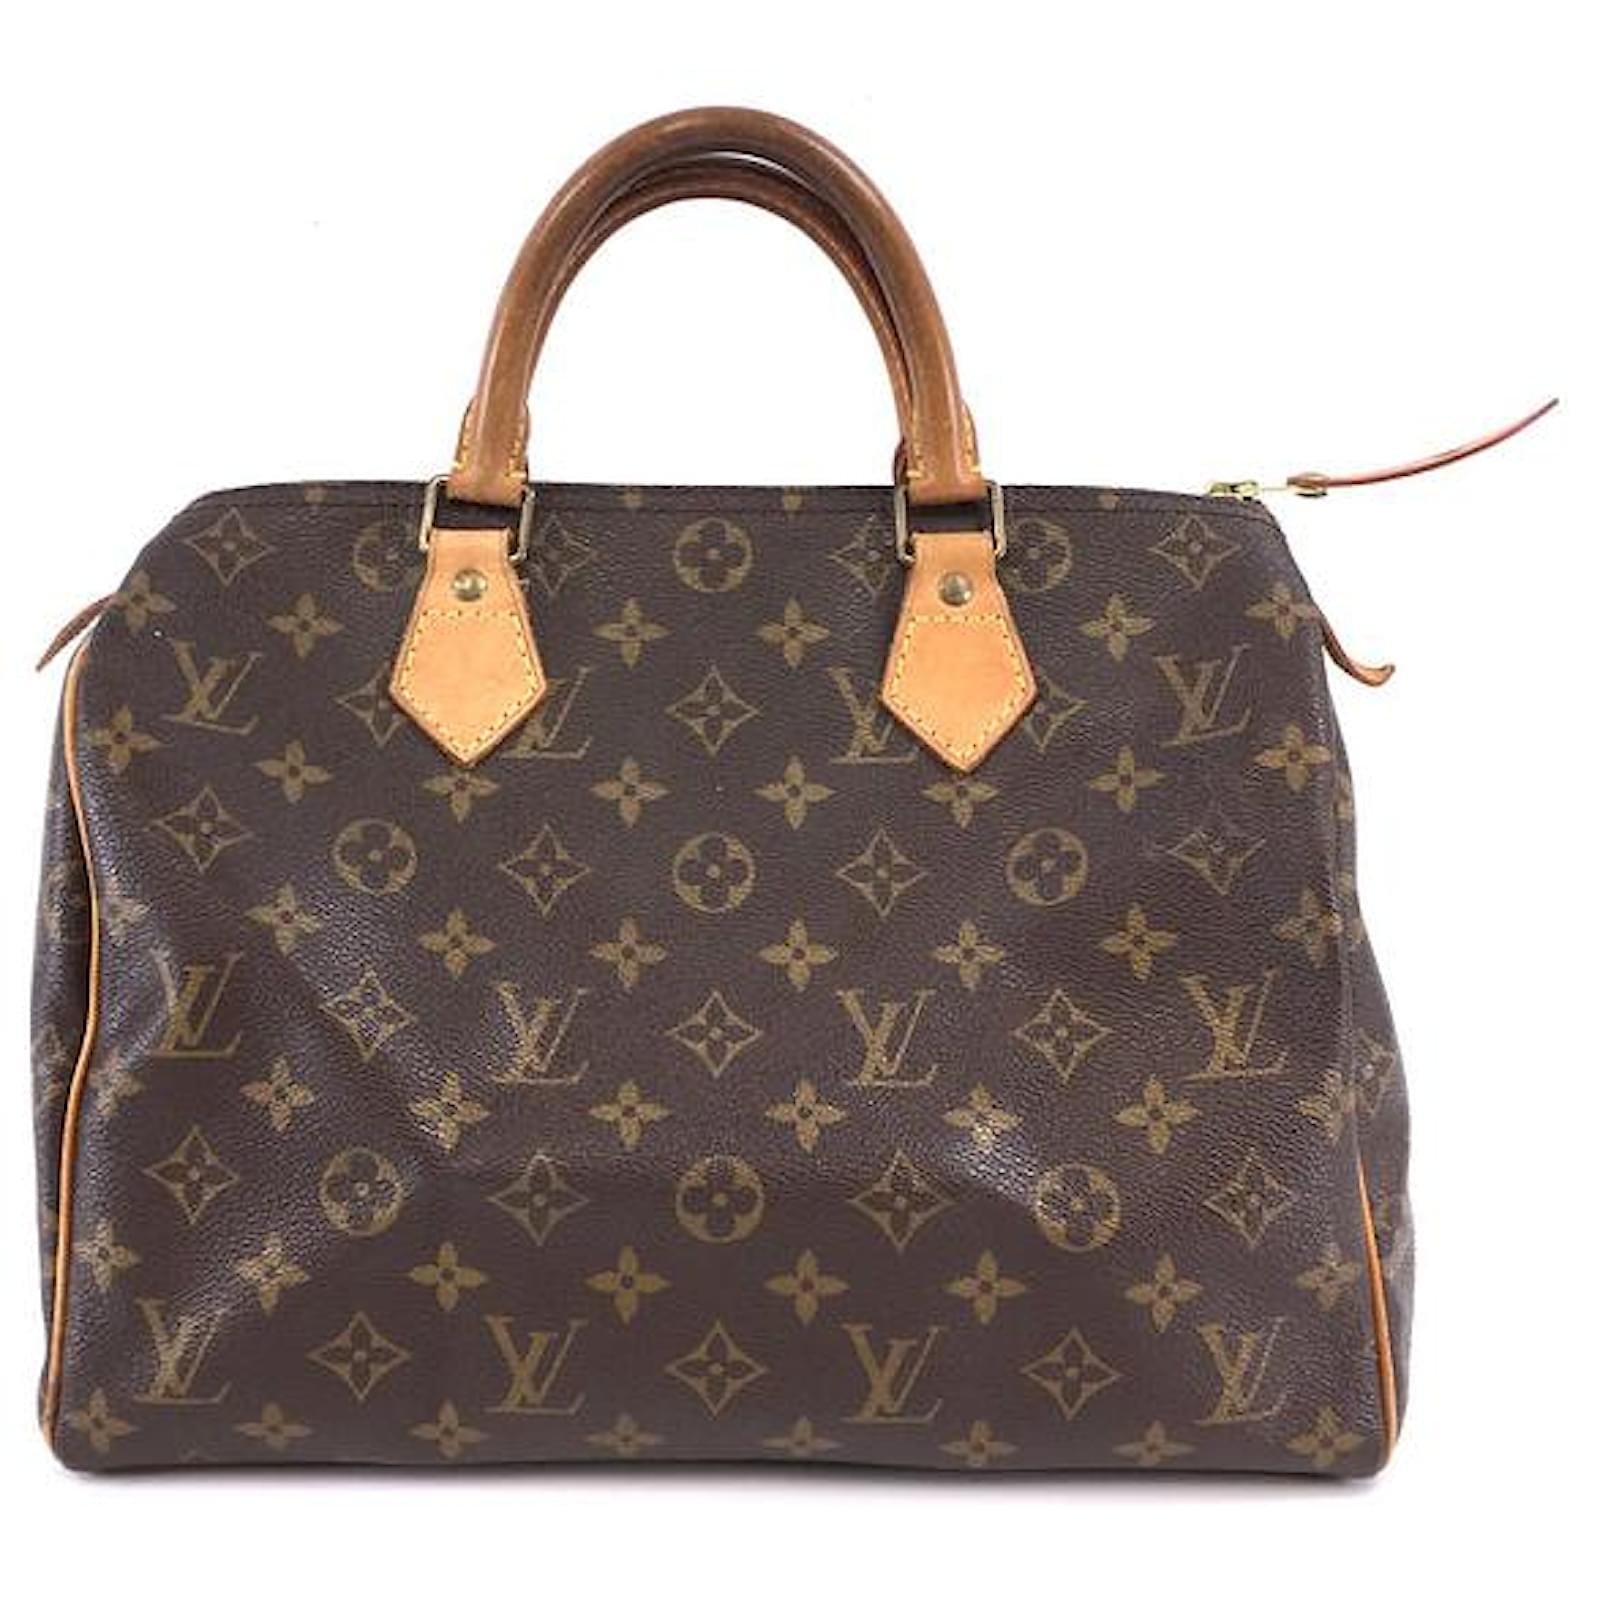 Louis Vuitton, Bags, Authentic Louis Vuitton Speedy 35 Monogram